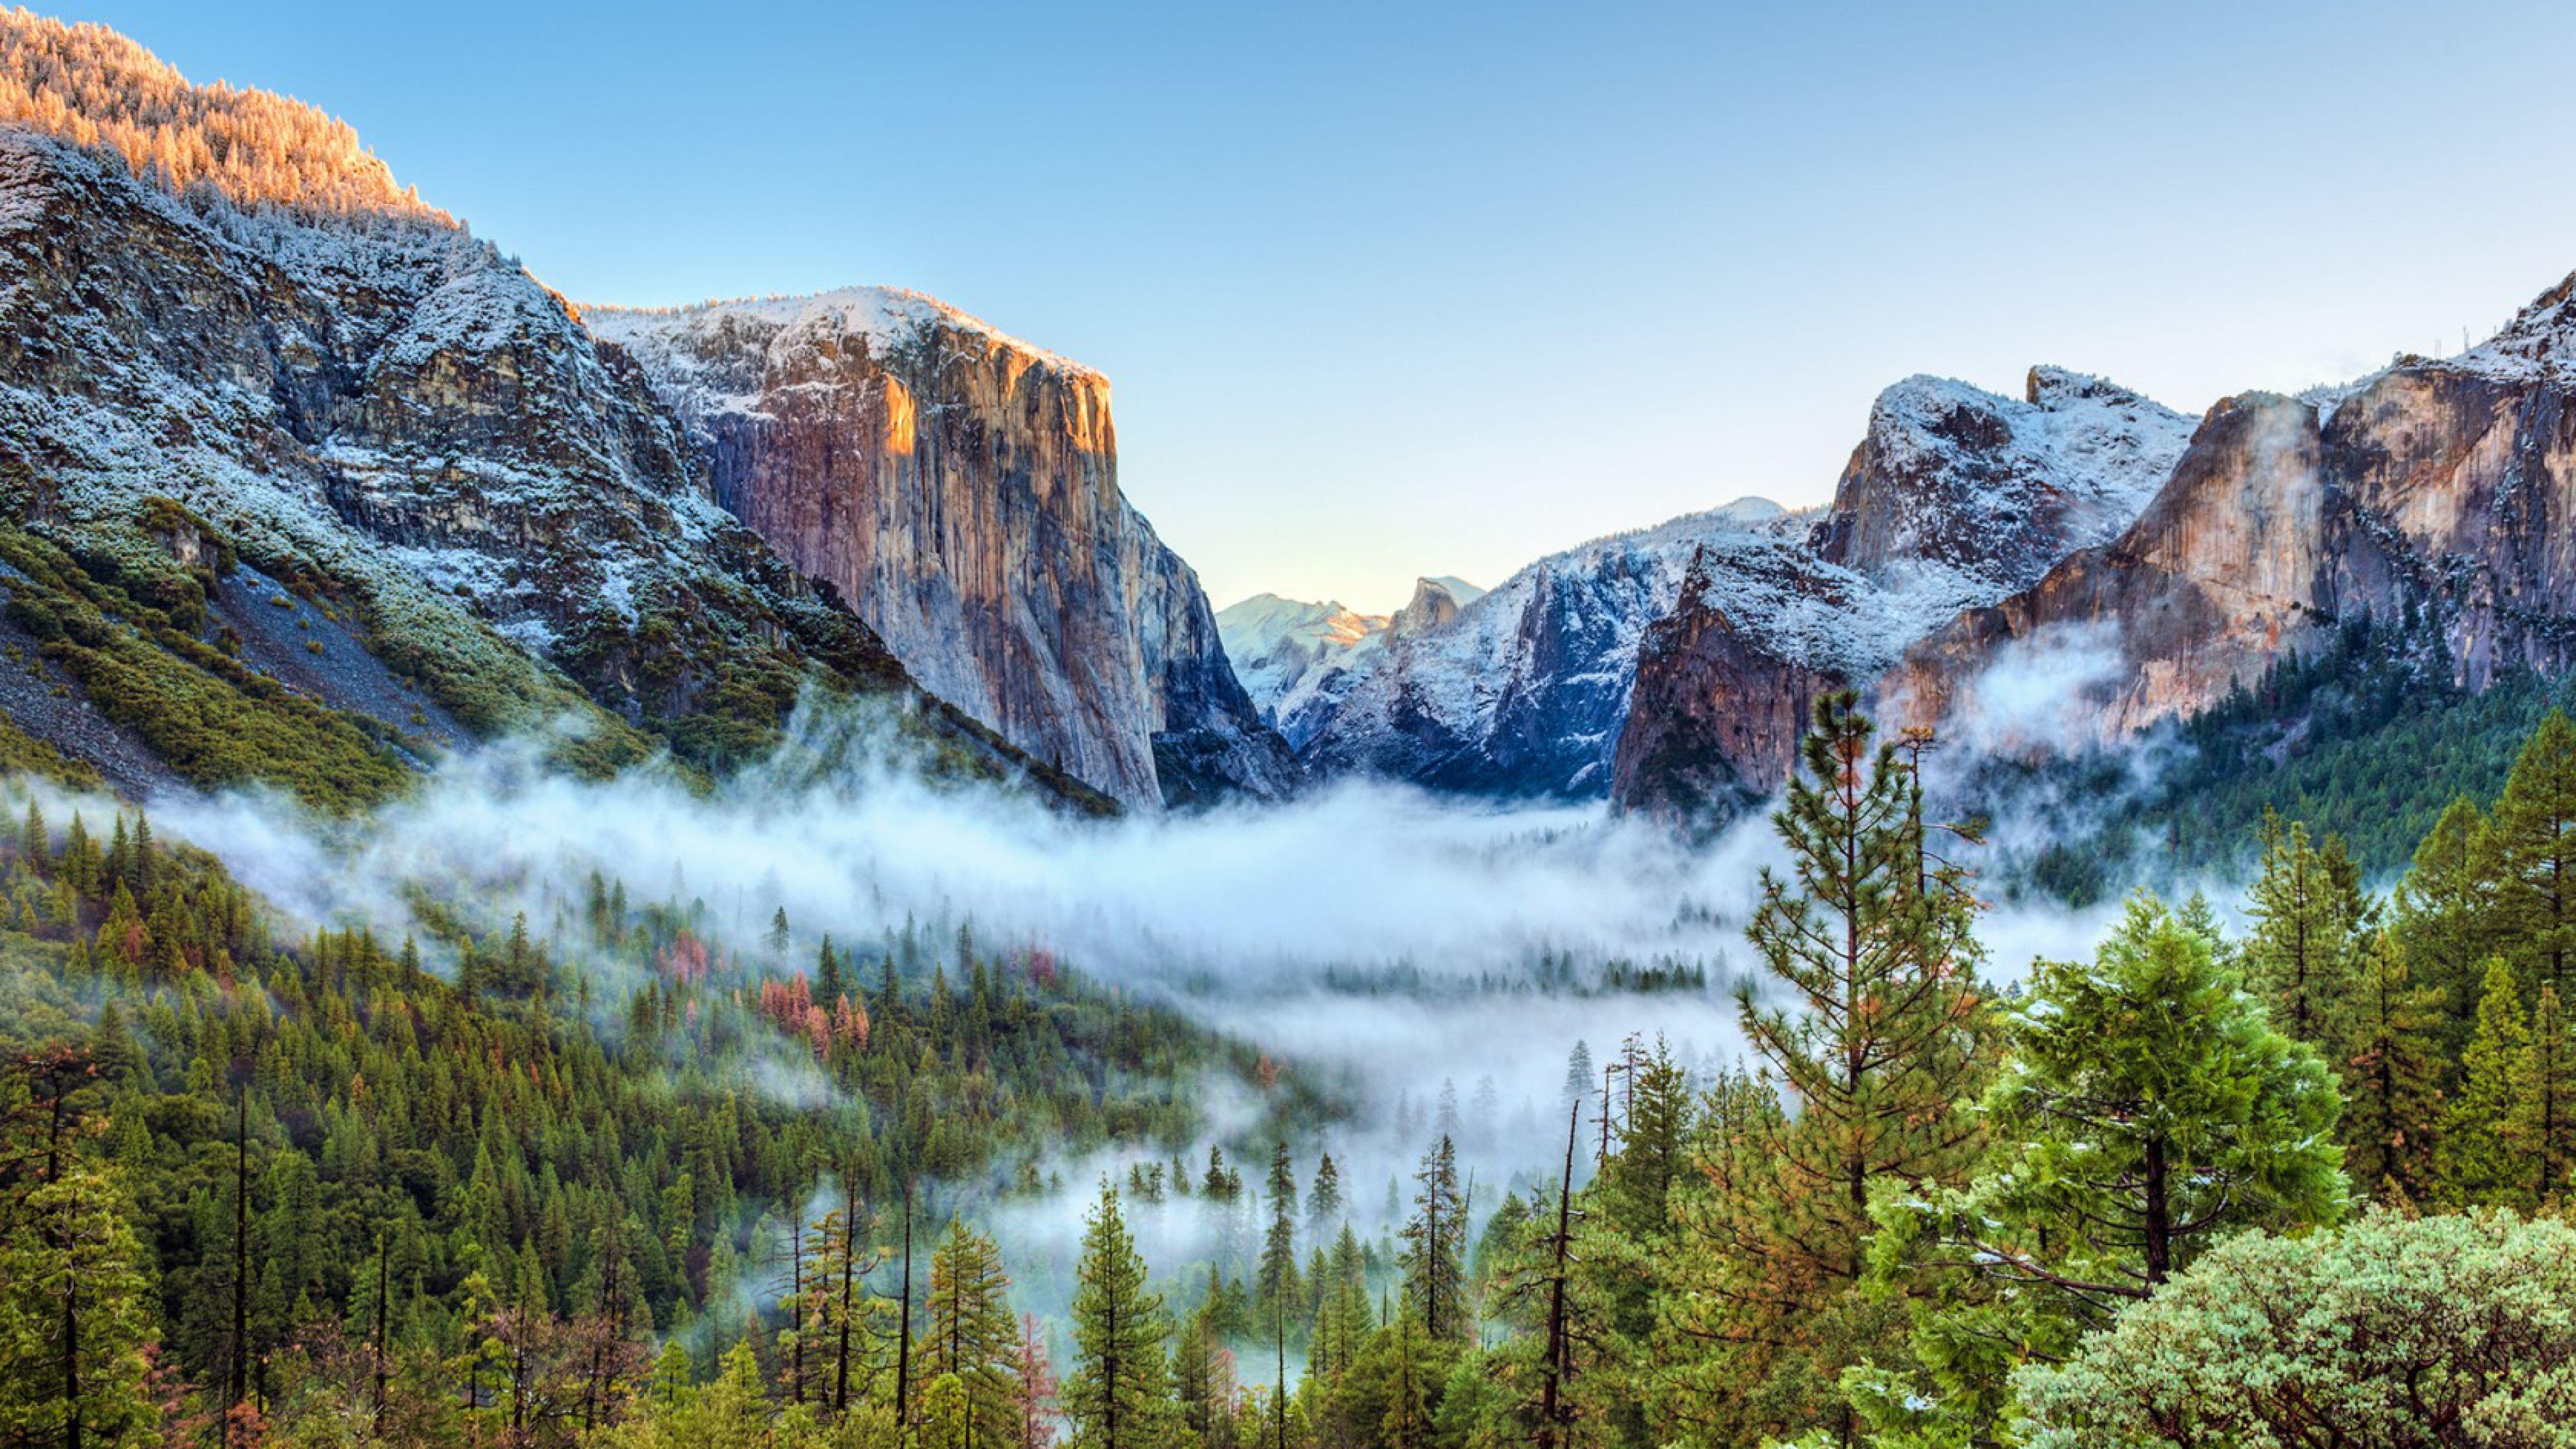 Wallpaper mountains apple mac Yosemite images for desktop section  природа  download